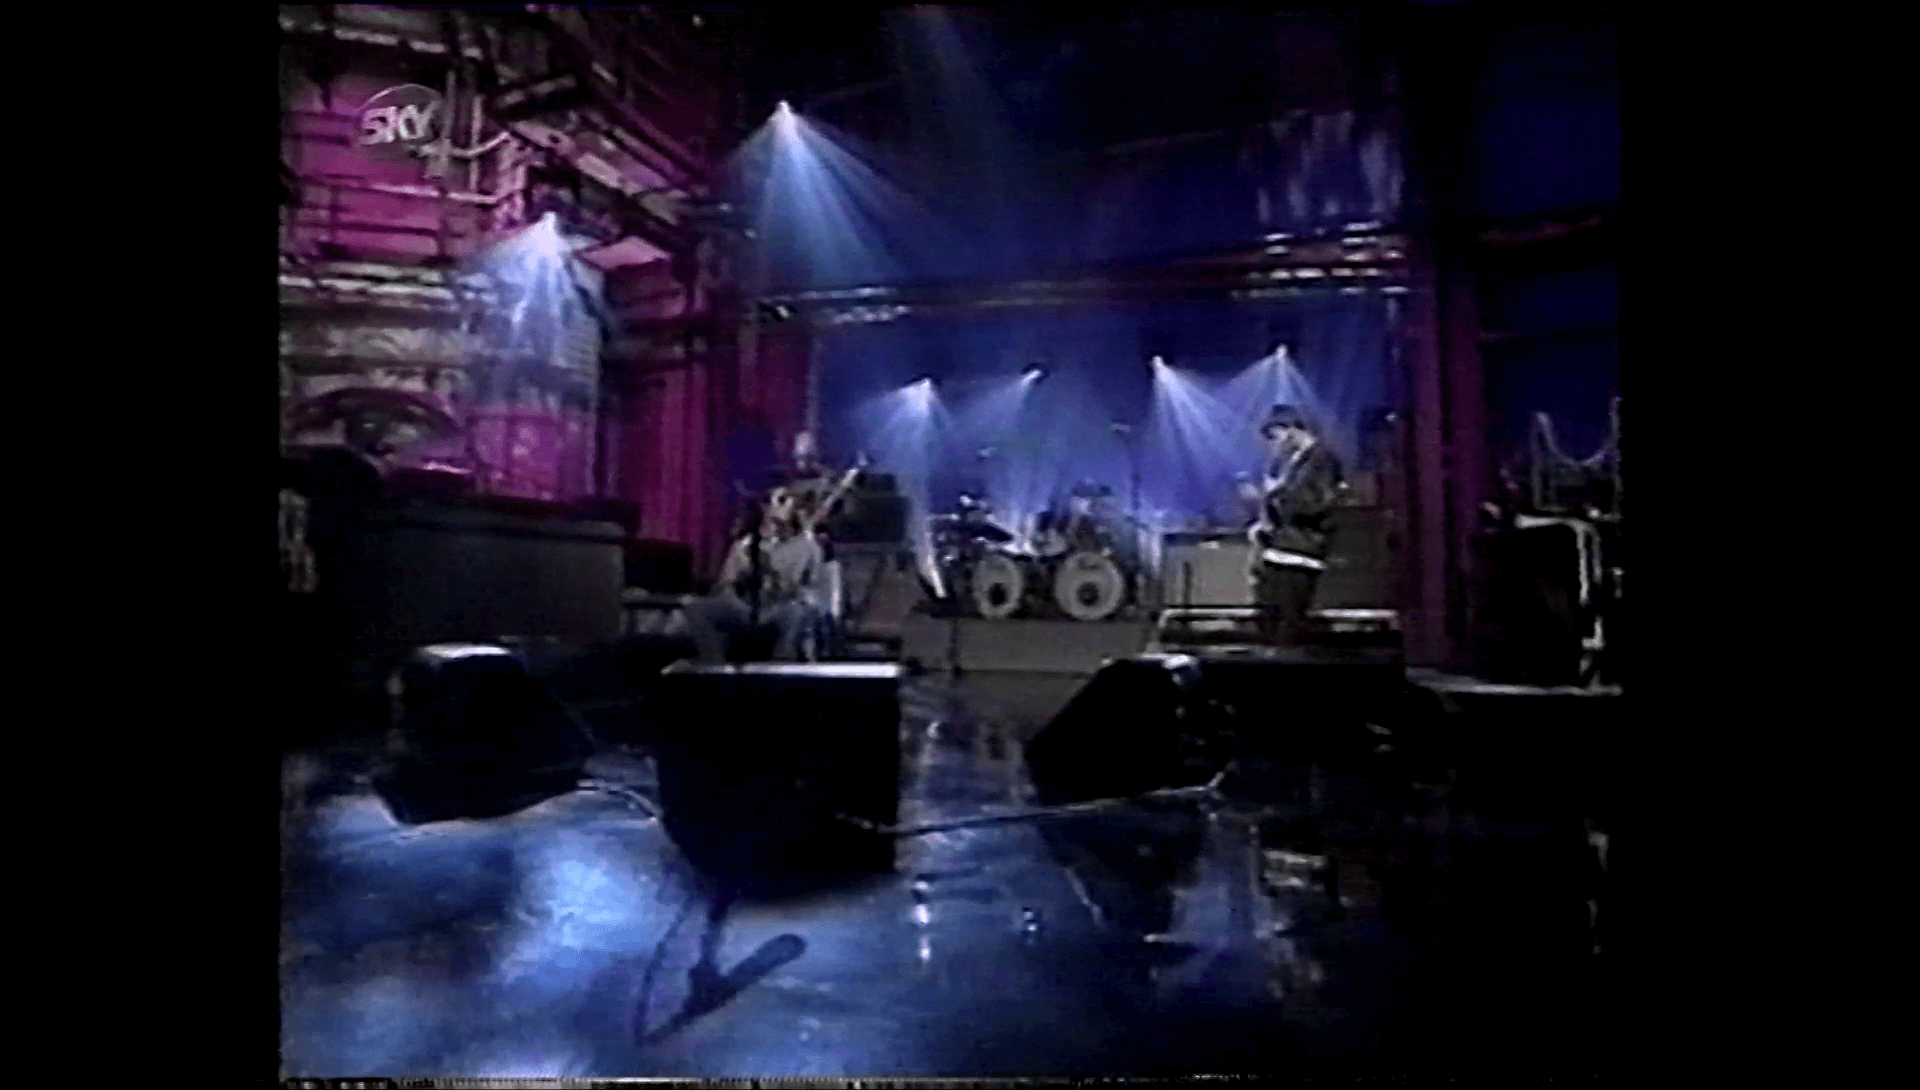 Oasis at Ed Sullivan Theater, New York, USA - October 9, 1997